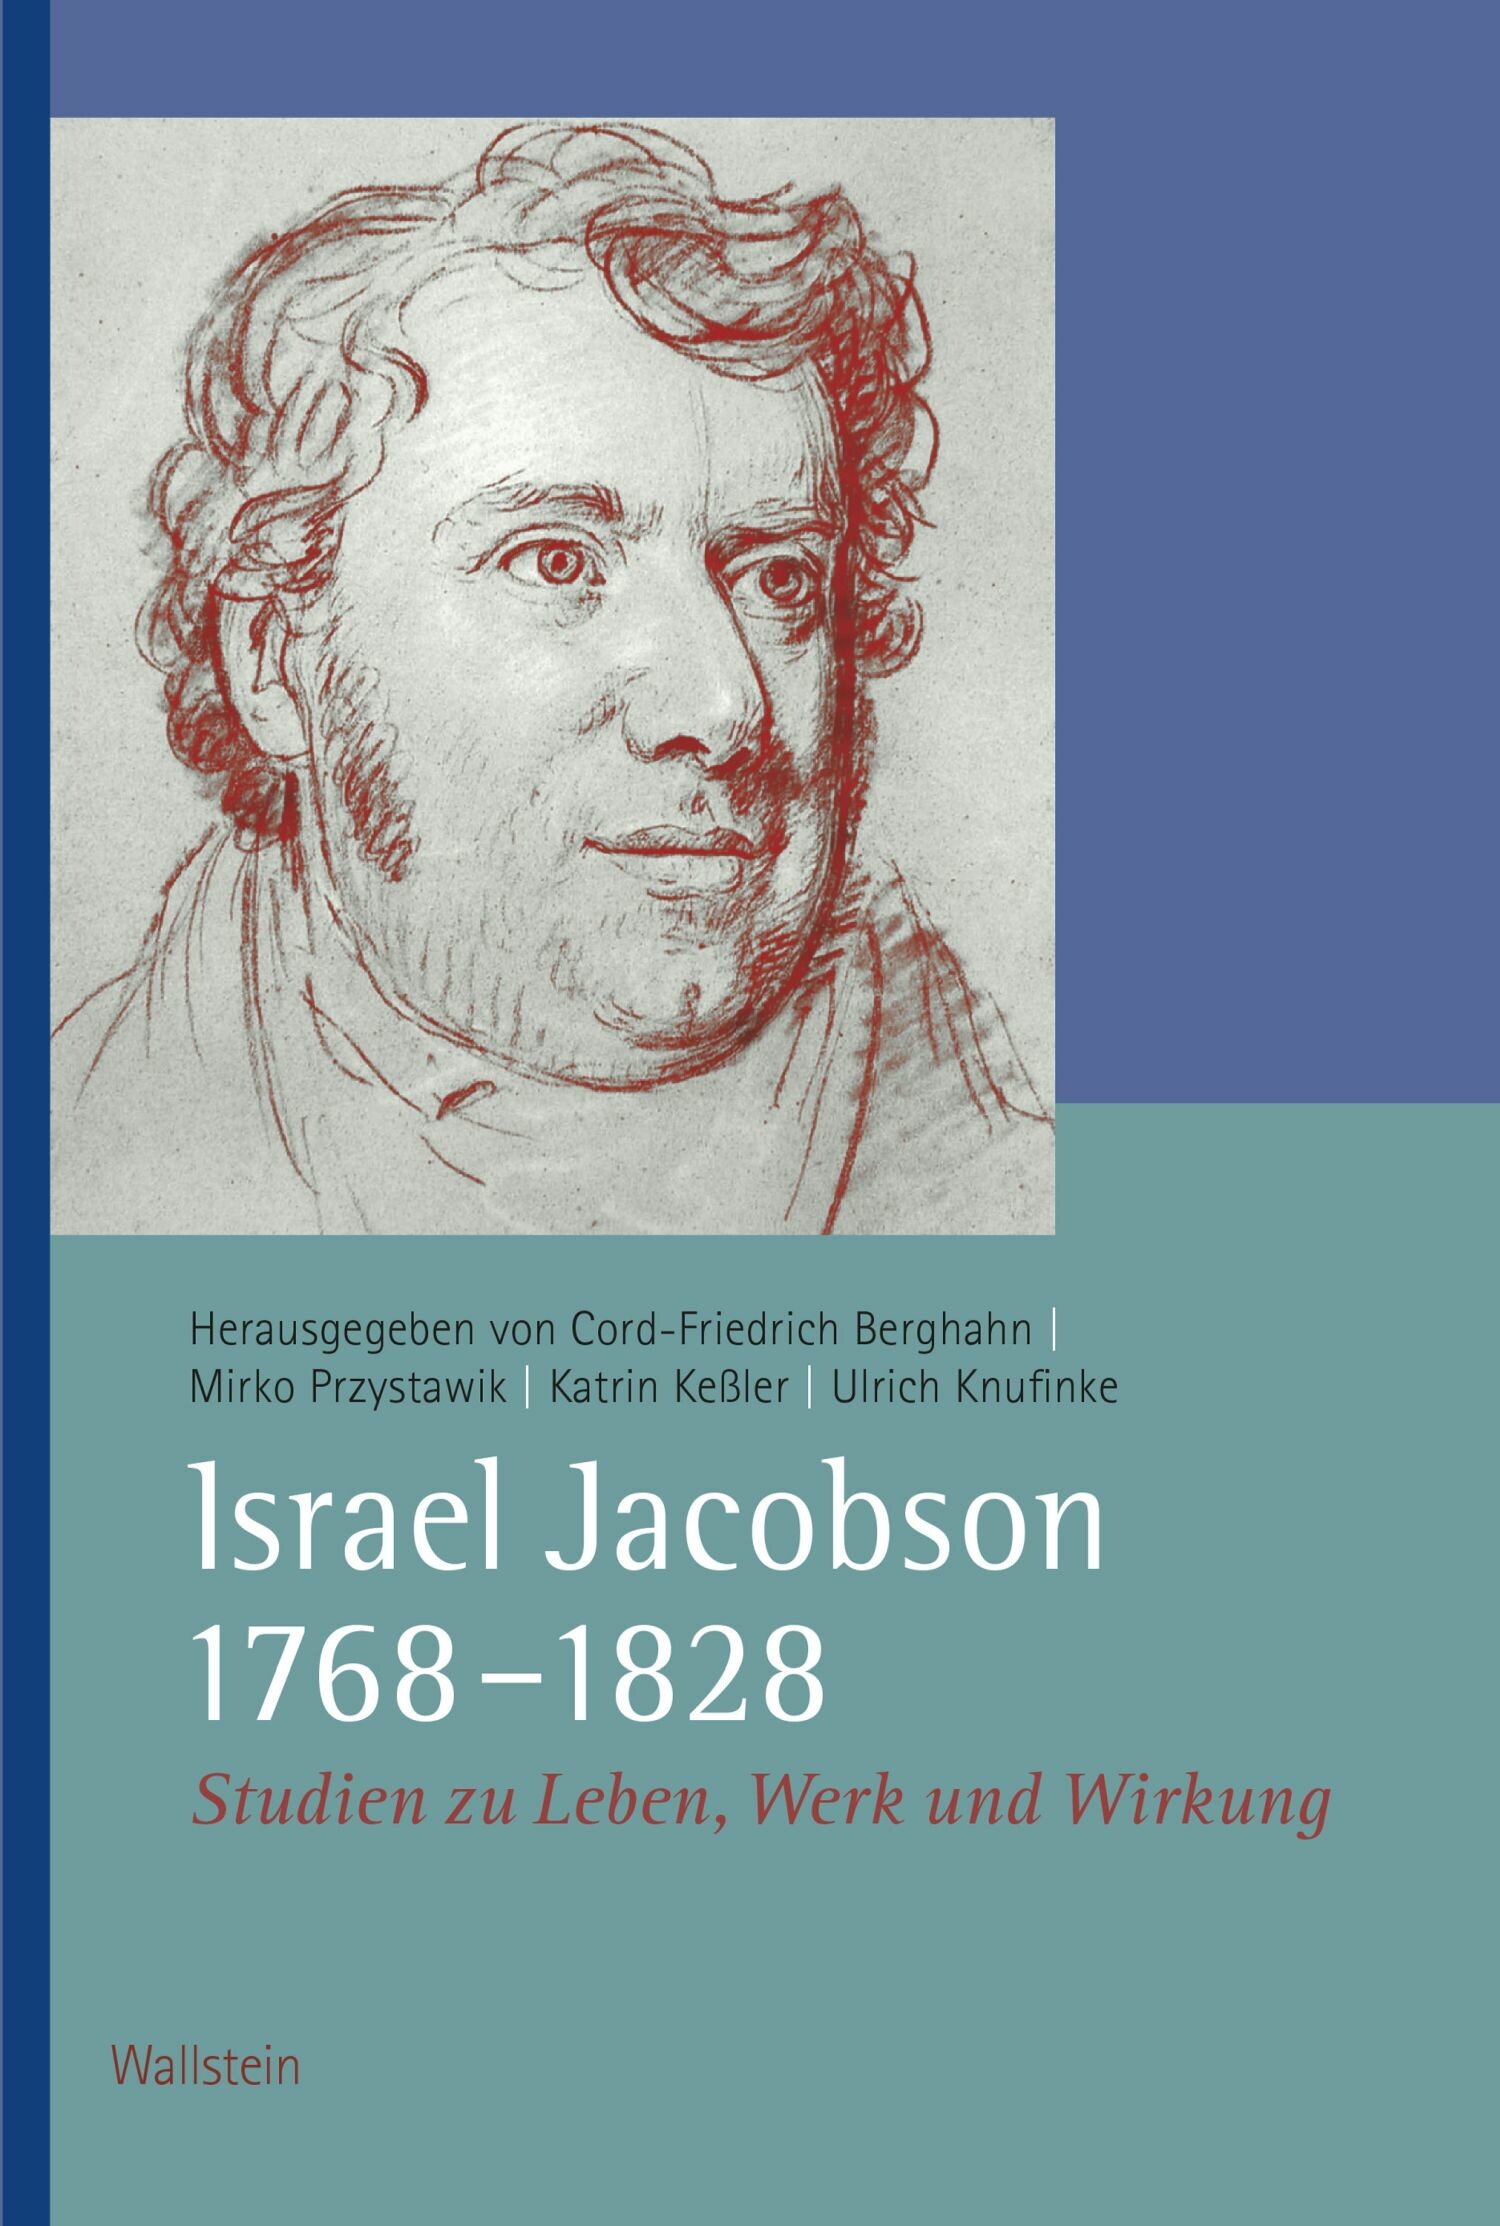 Israel Jacobson (1768-1828)